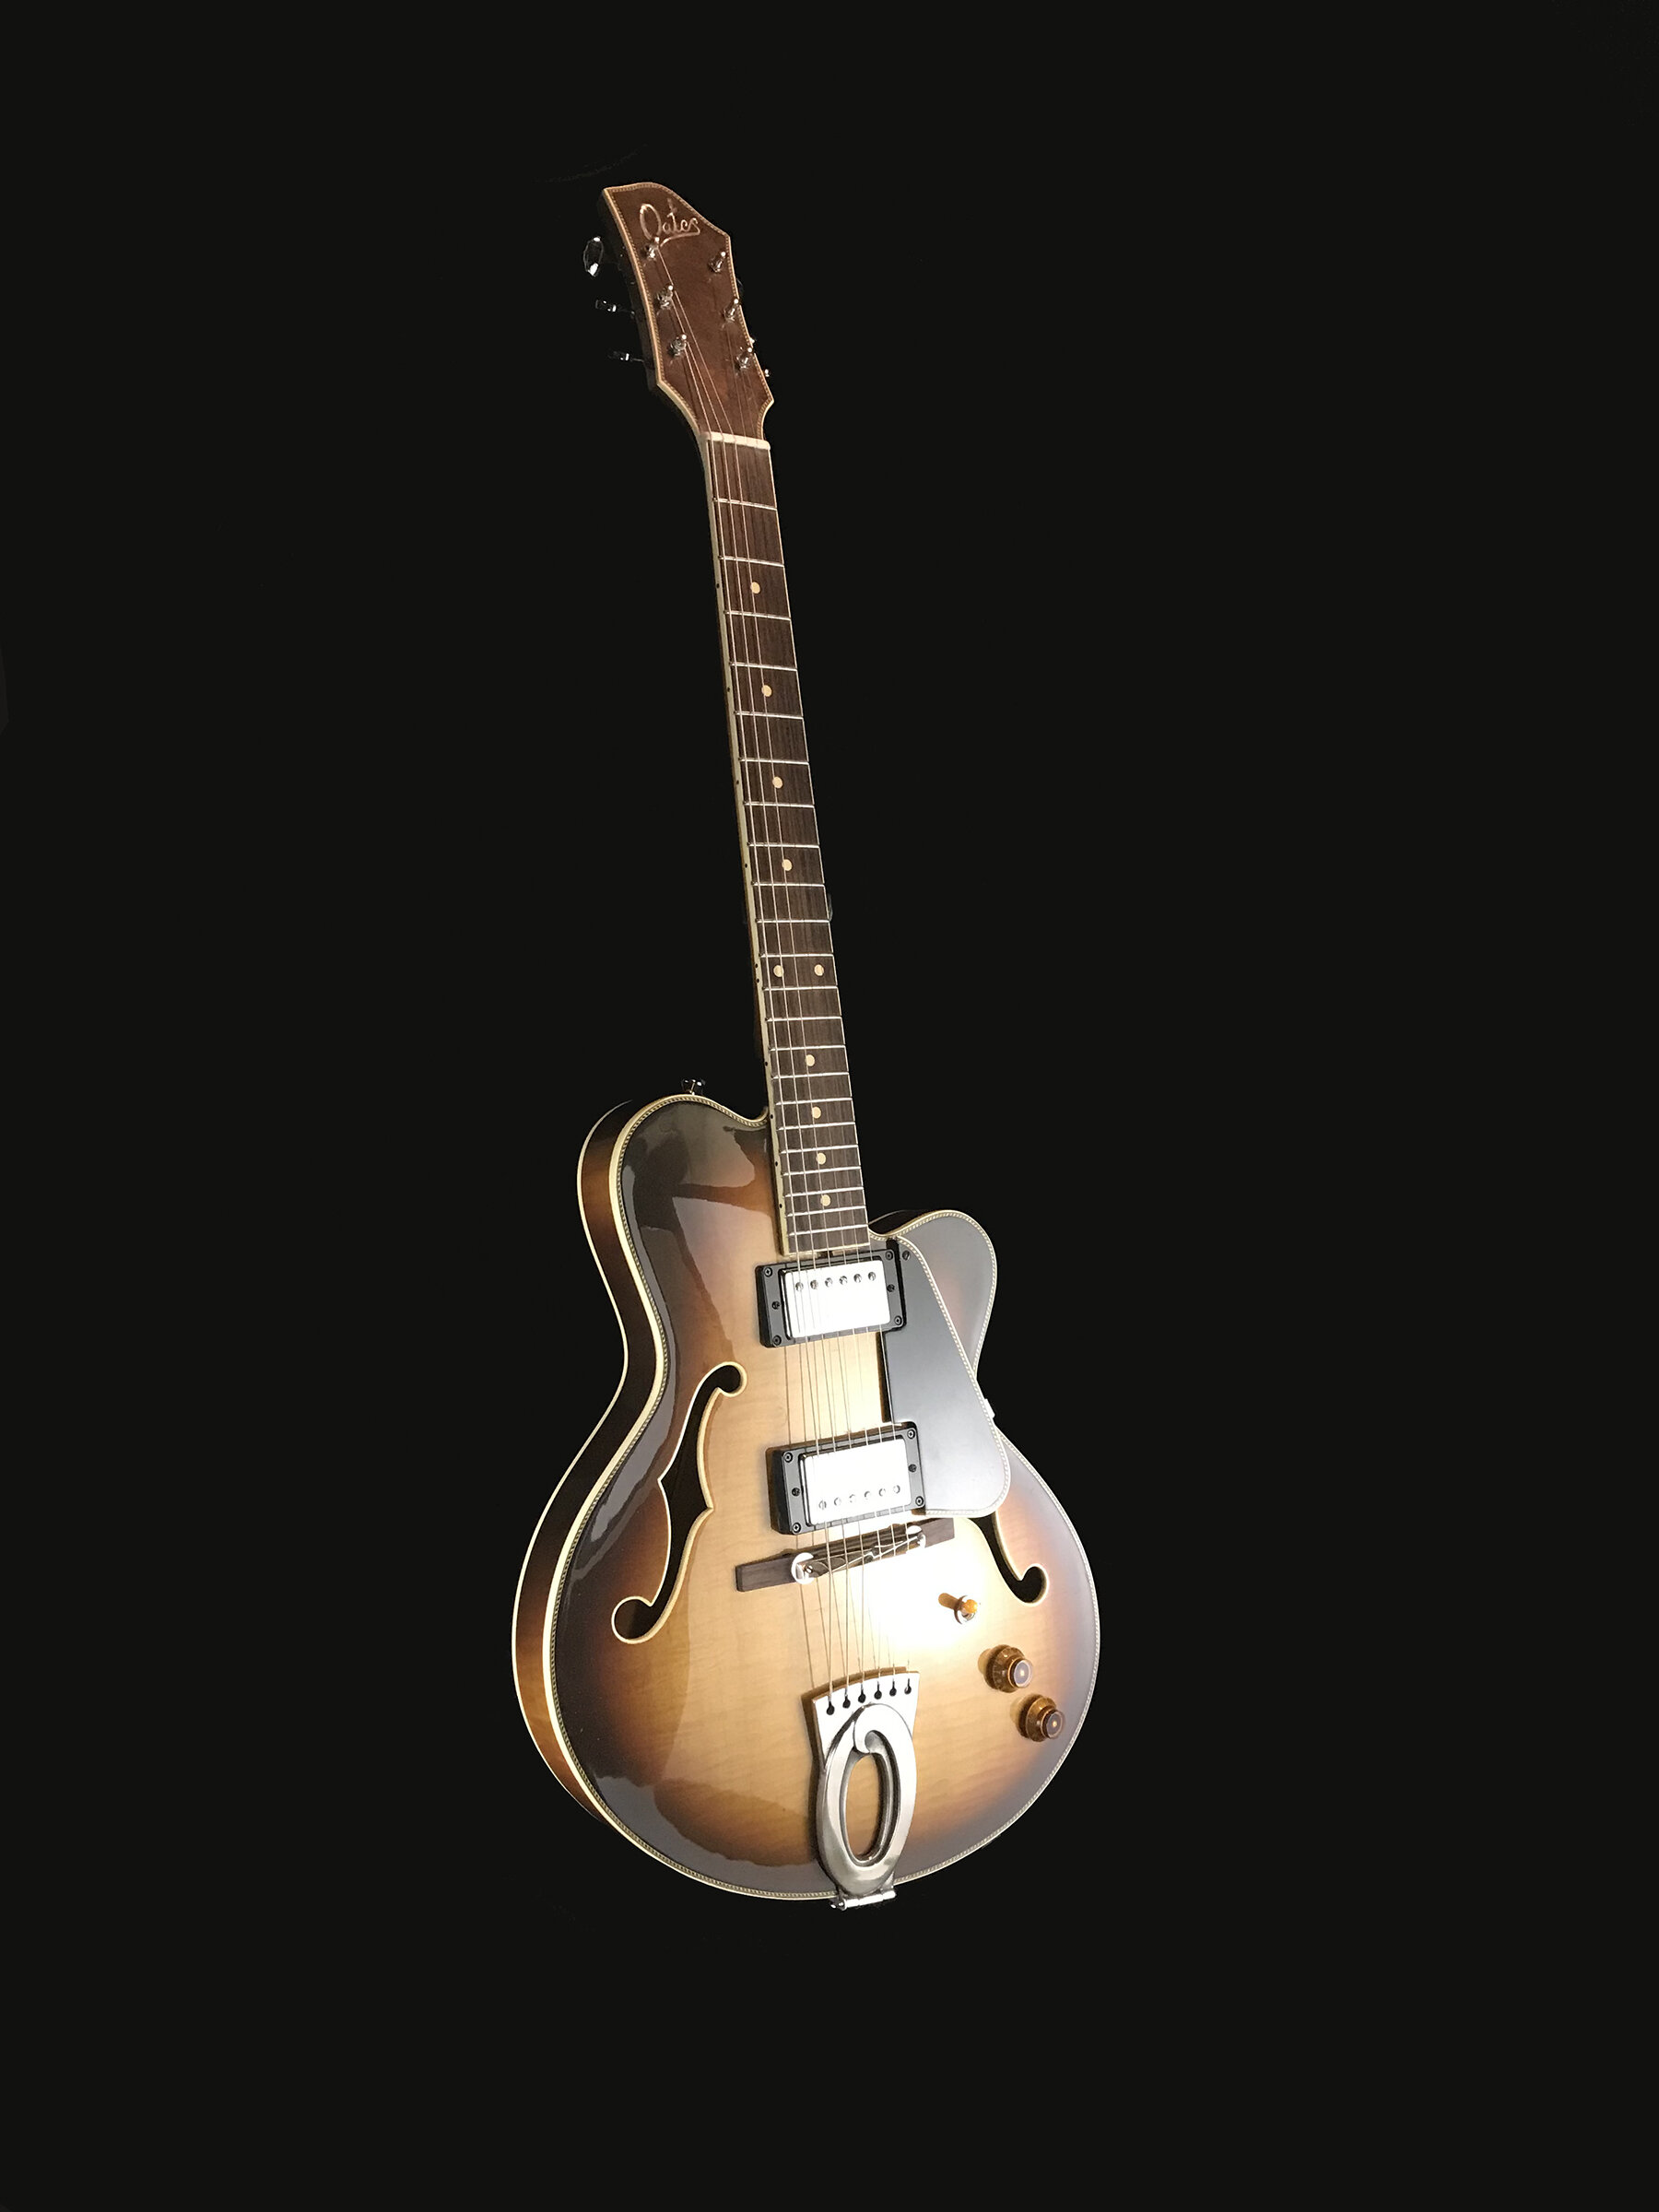 Guitar 3 threequarter web .jpg